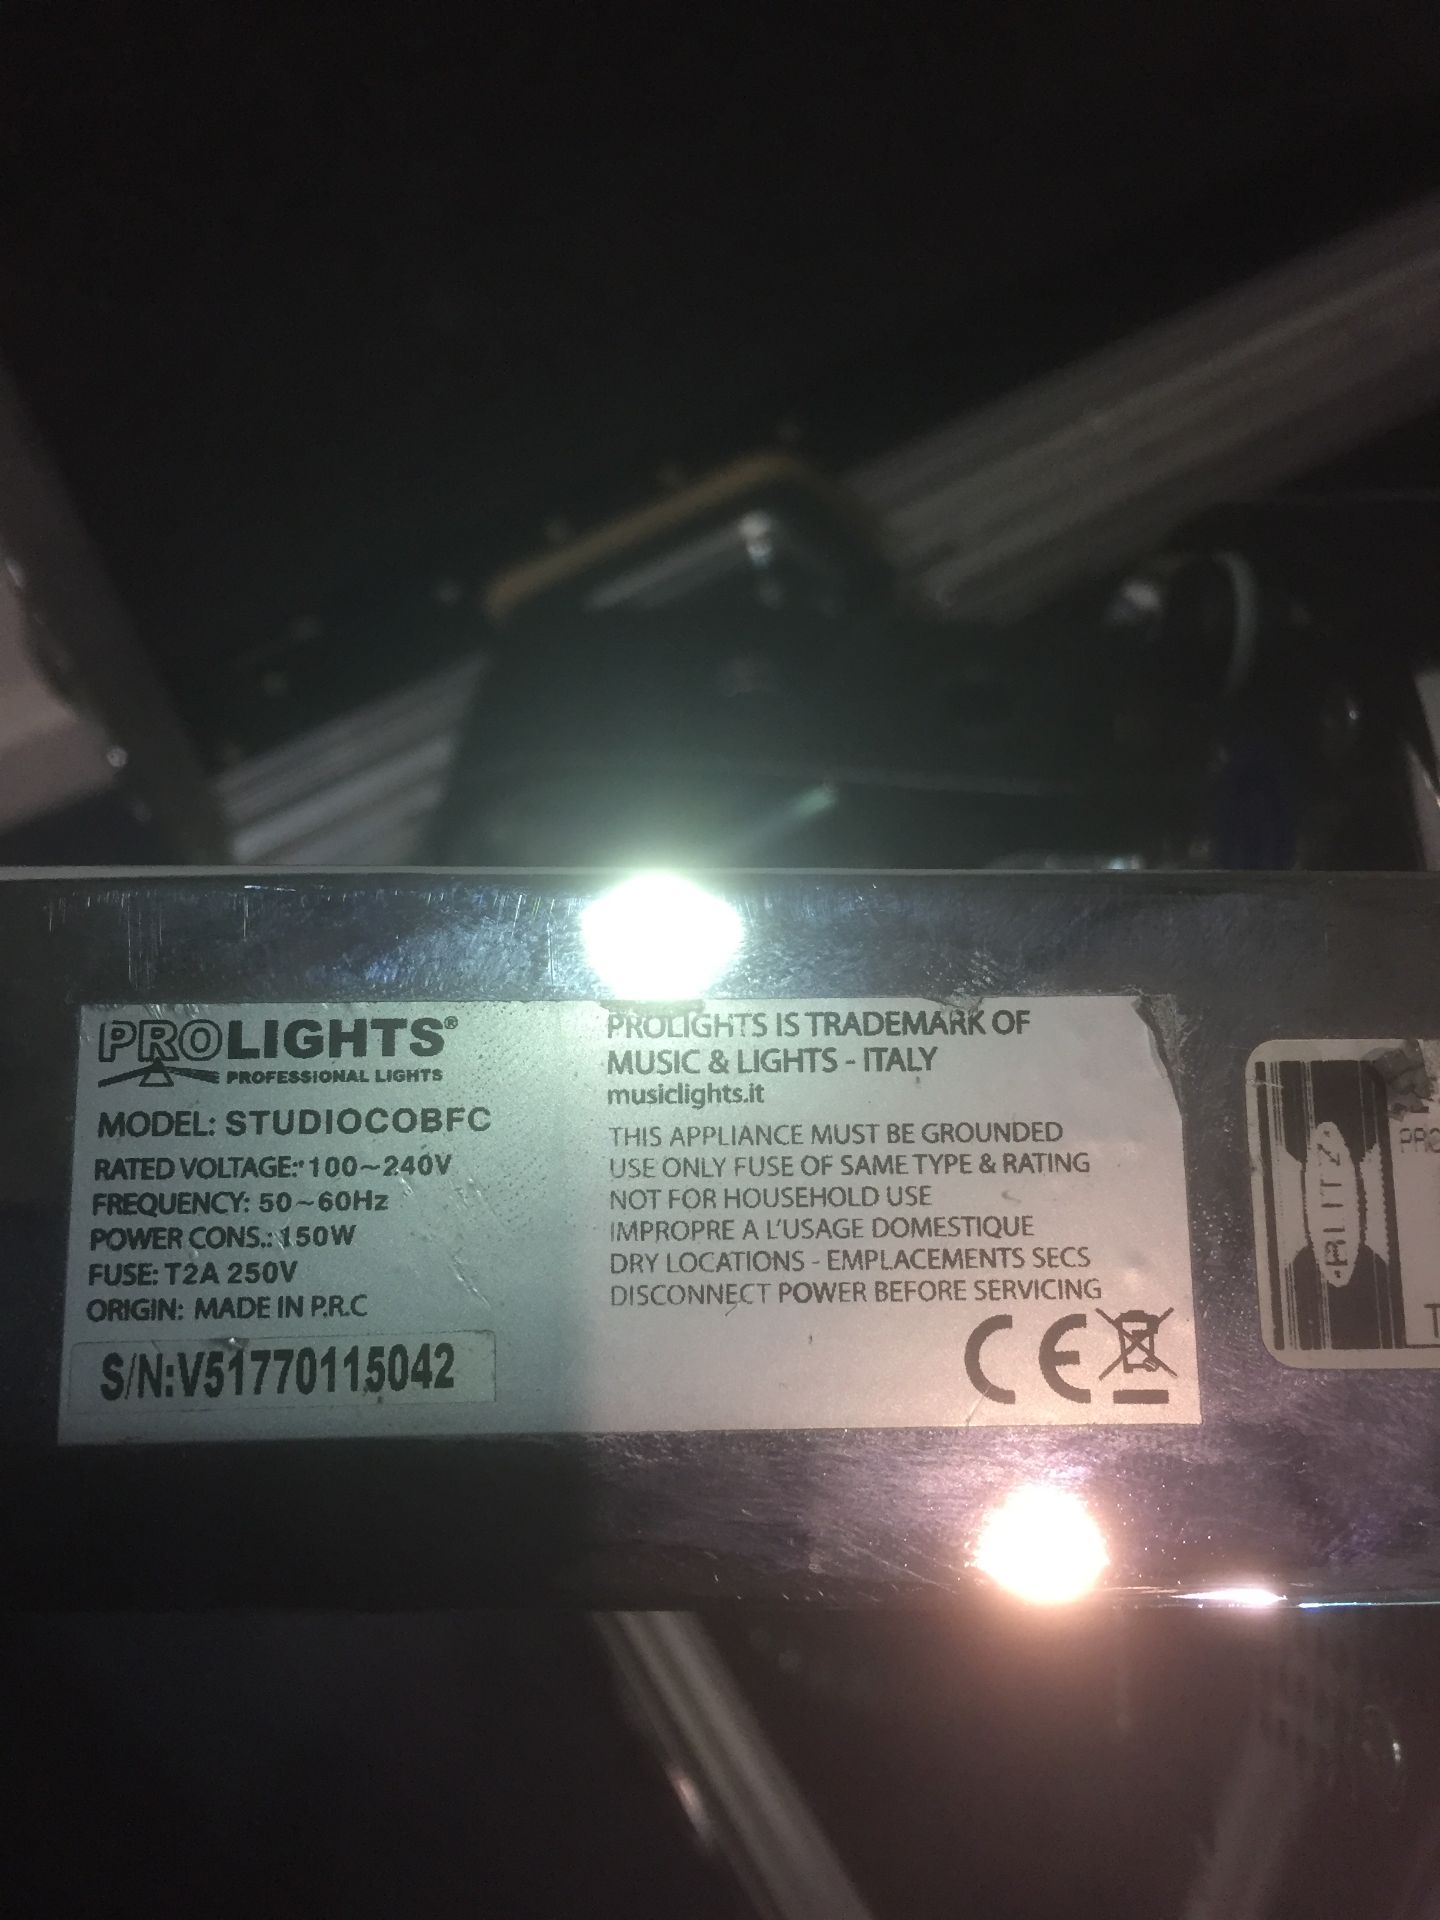 6 Prolights Studio Cob FC LED light projectors, S/N V51770915107/V51770115113/V51770915042/ - Image 4 of 8